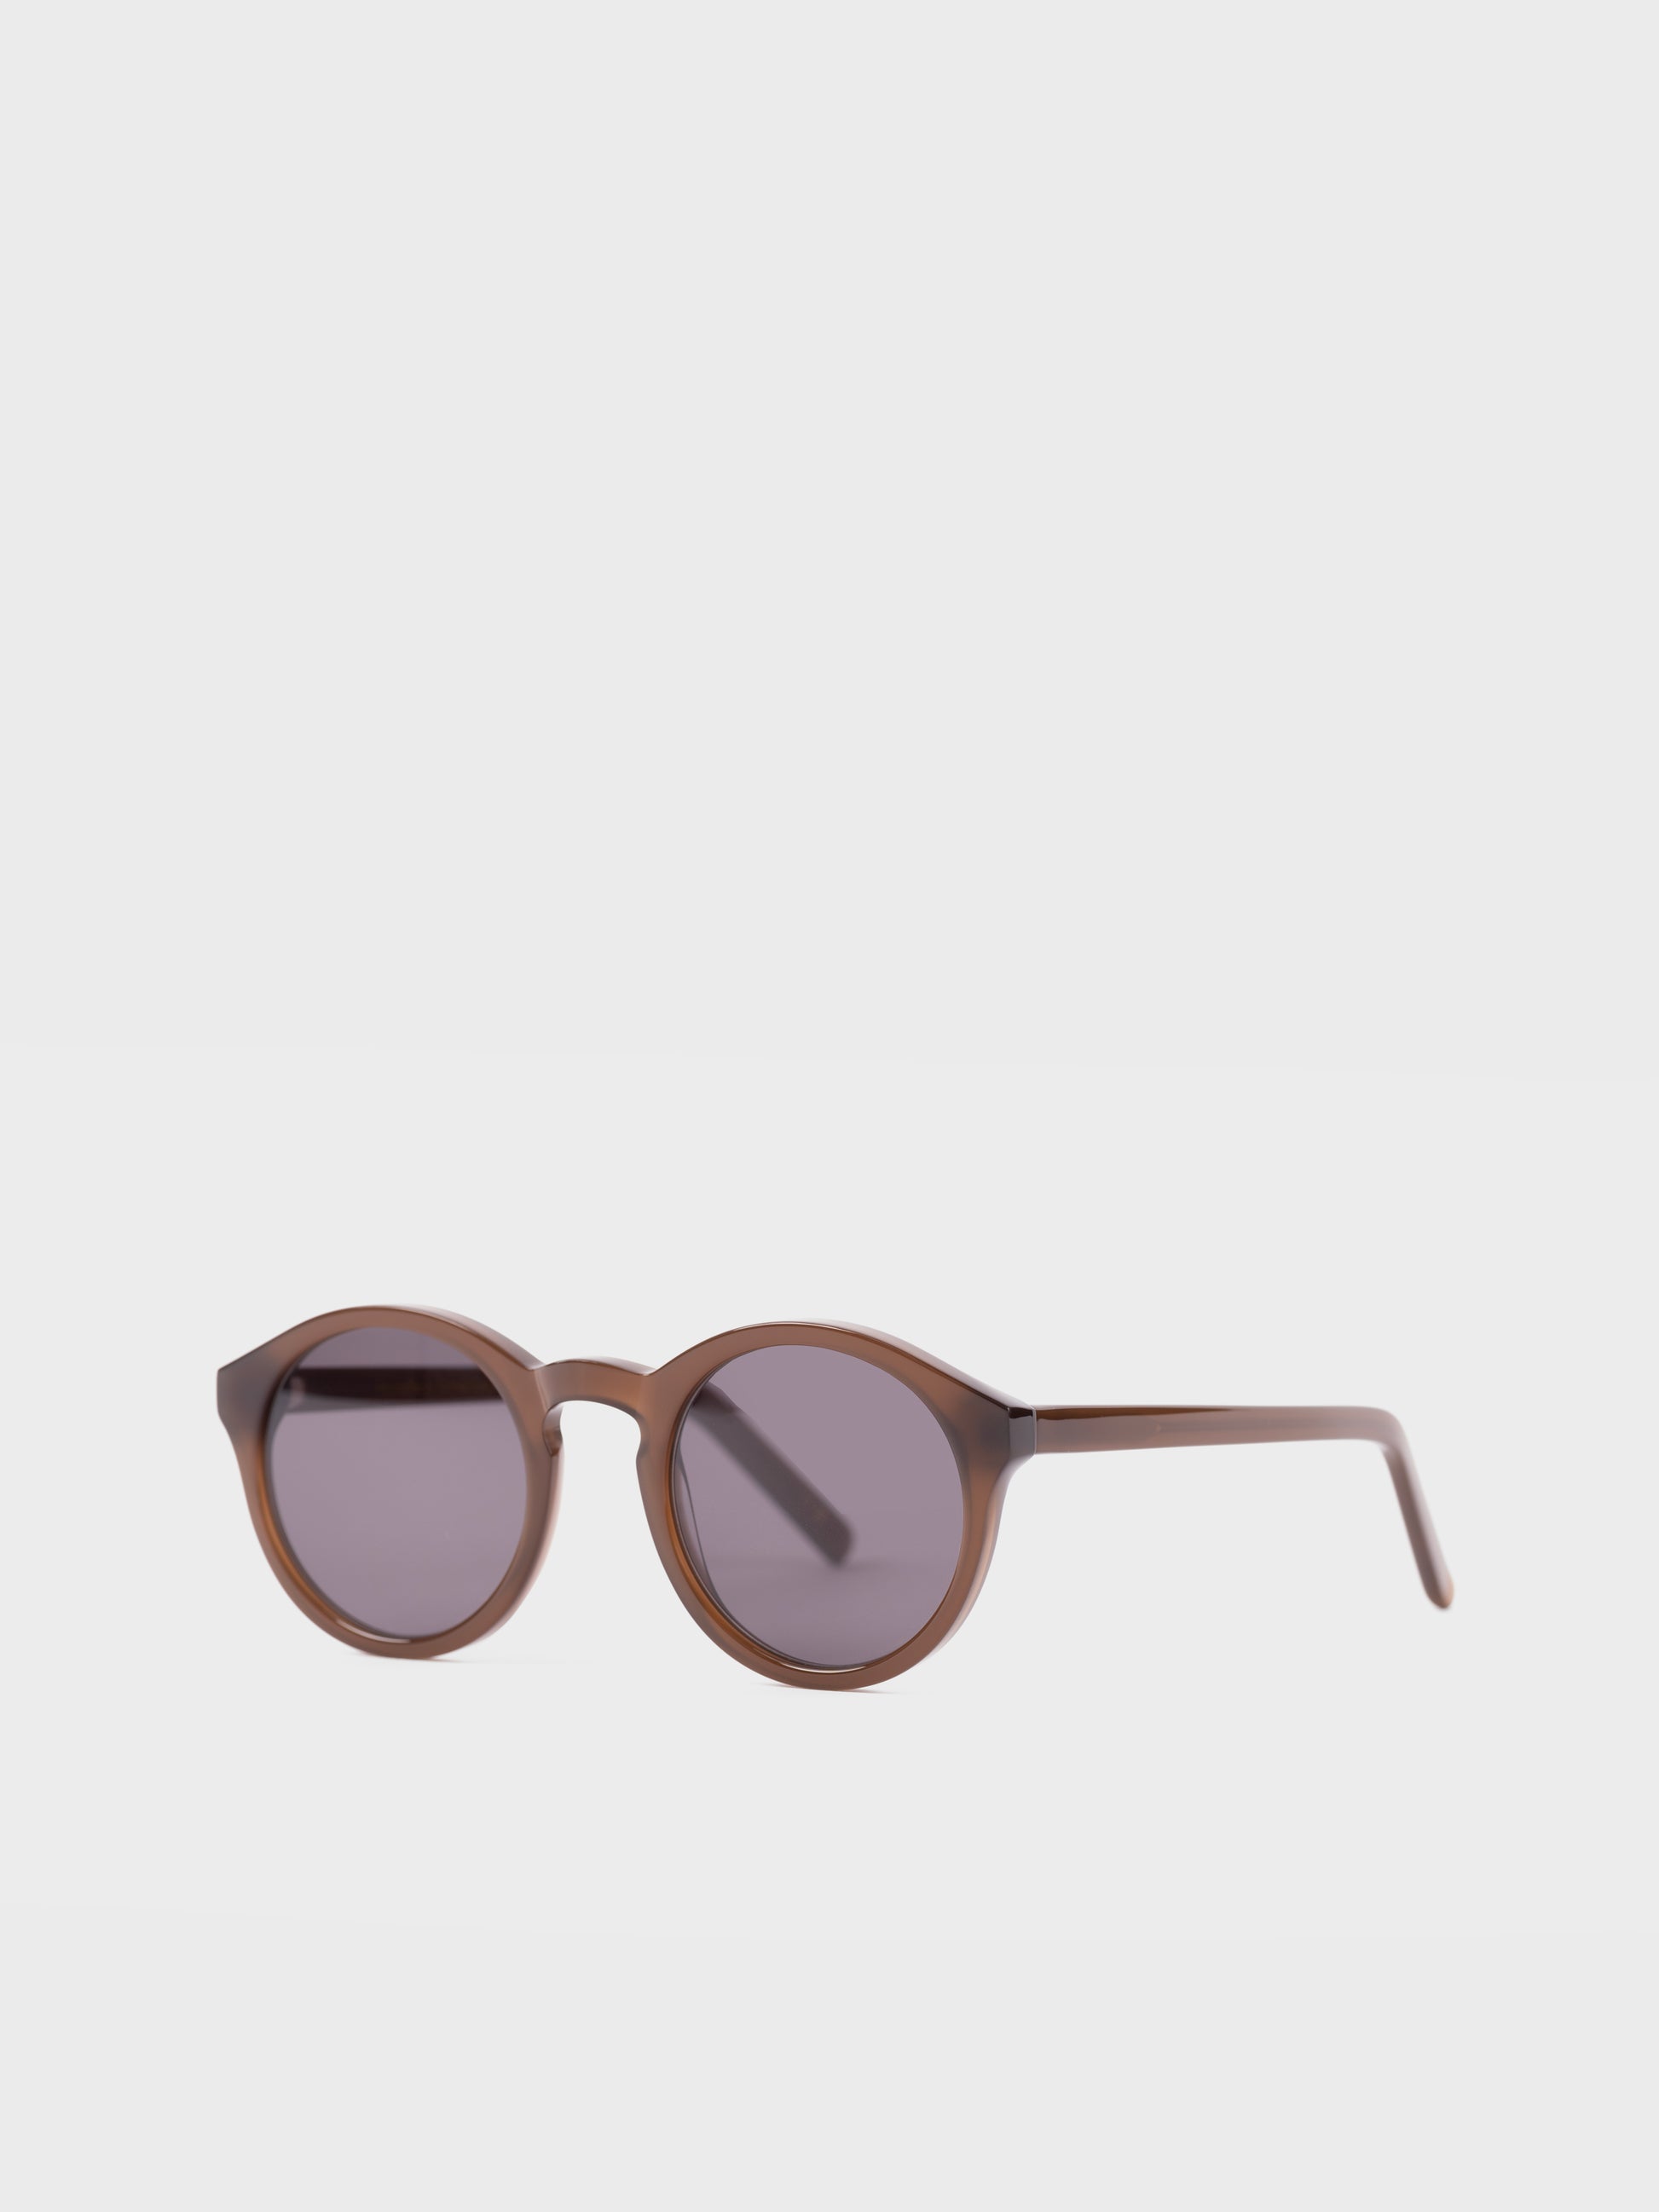 Monokel Sunglasses - Barstow Chocolate/Grey Lens